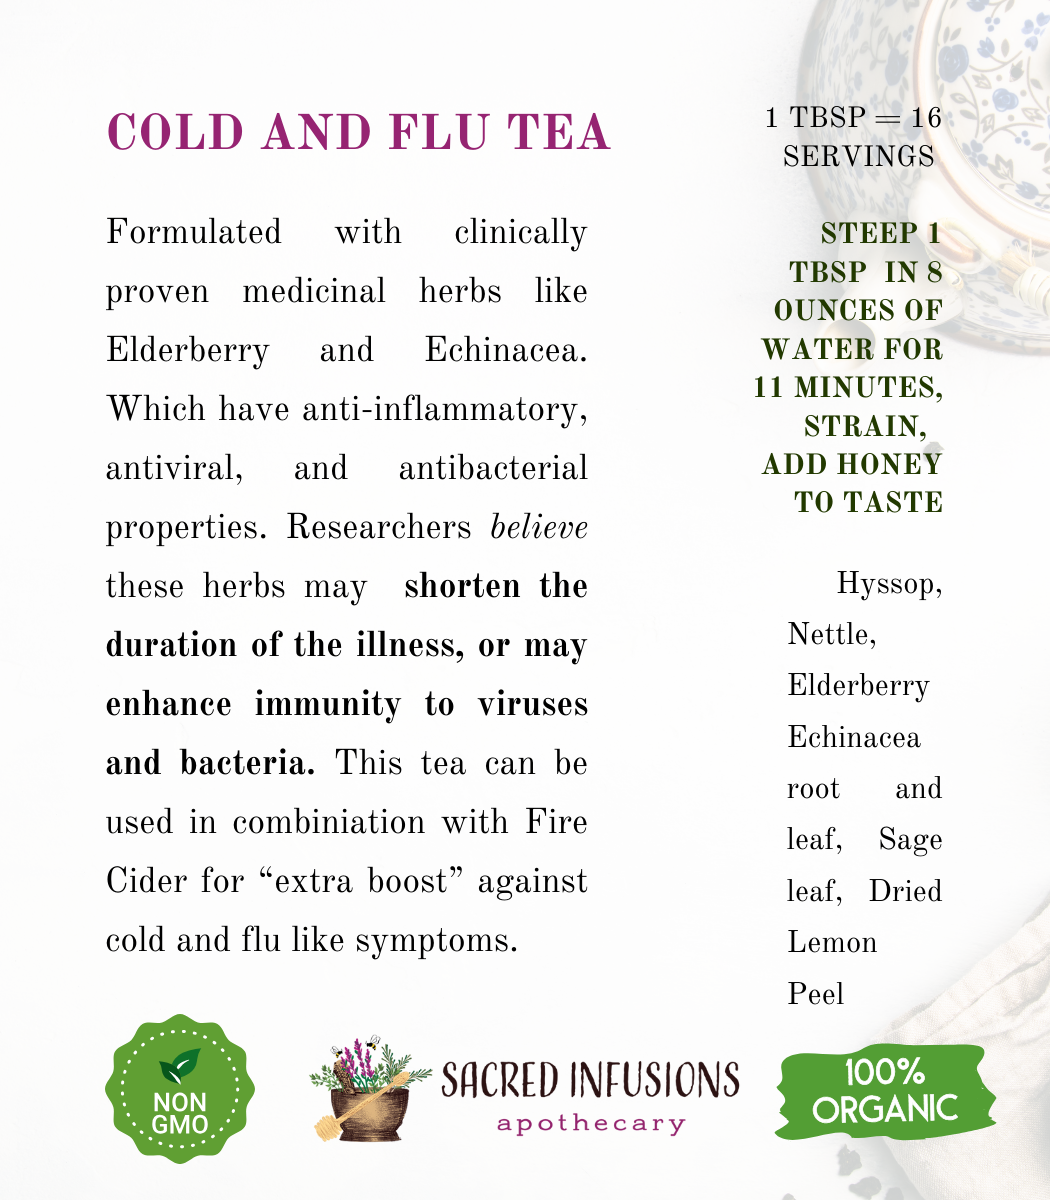 COLD AND FLU TEA